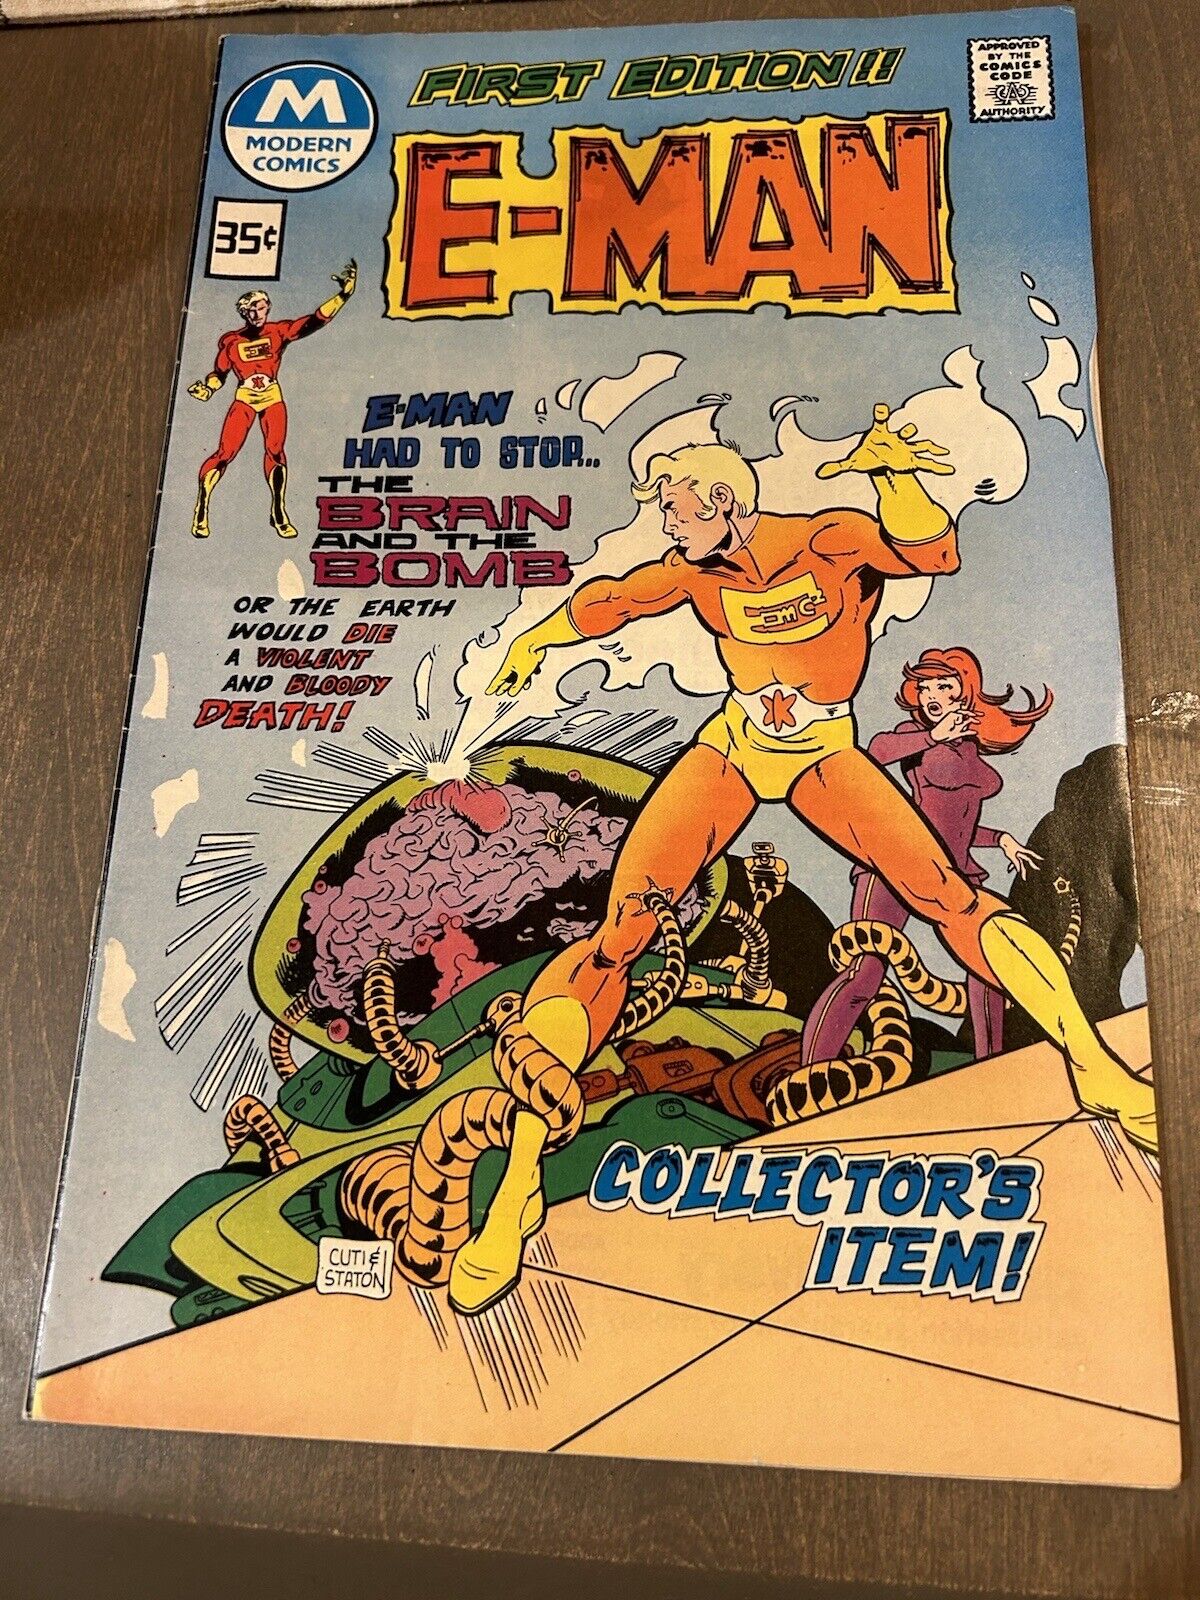 MODERN Comic Collectors Edition   KEY E-MAN #1 